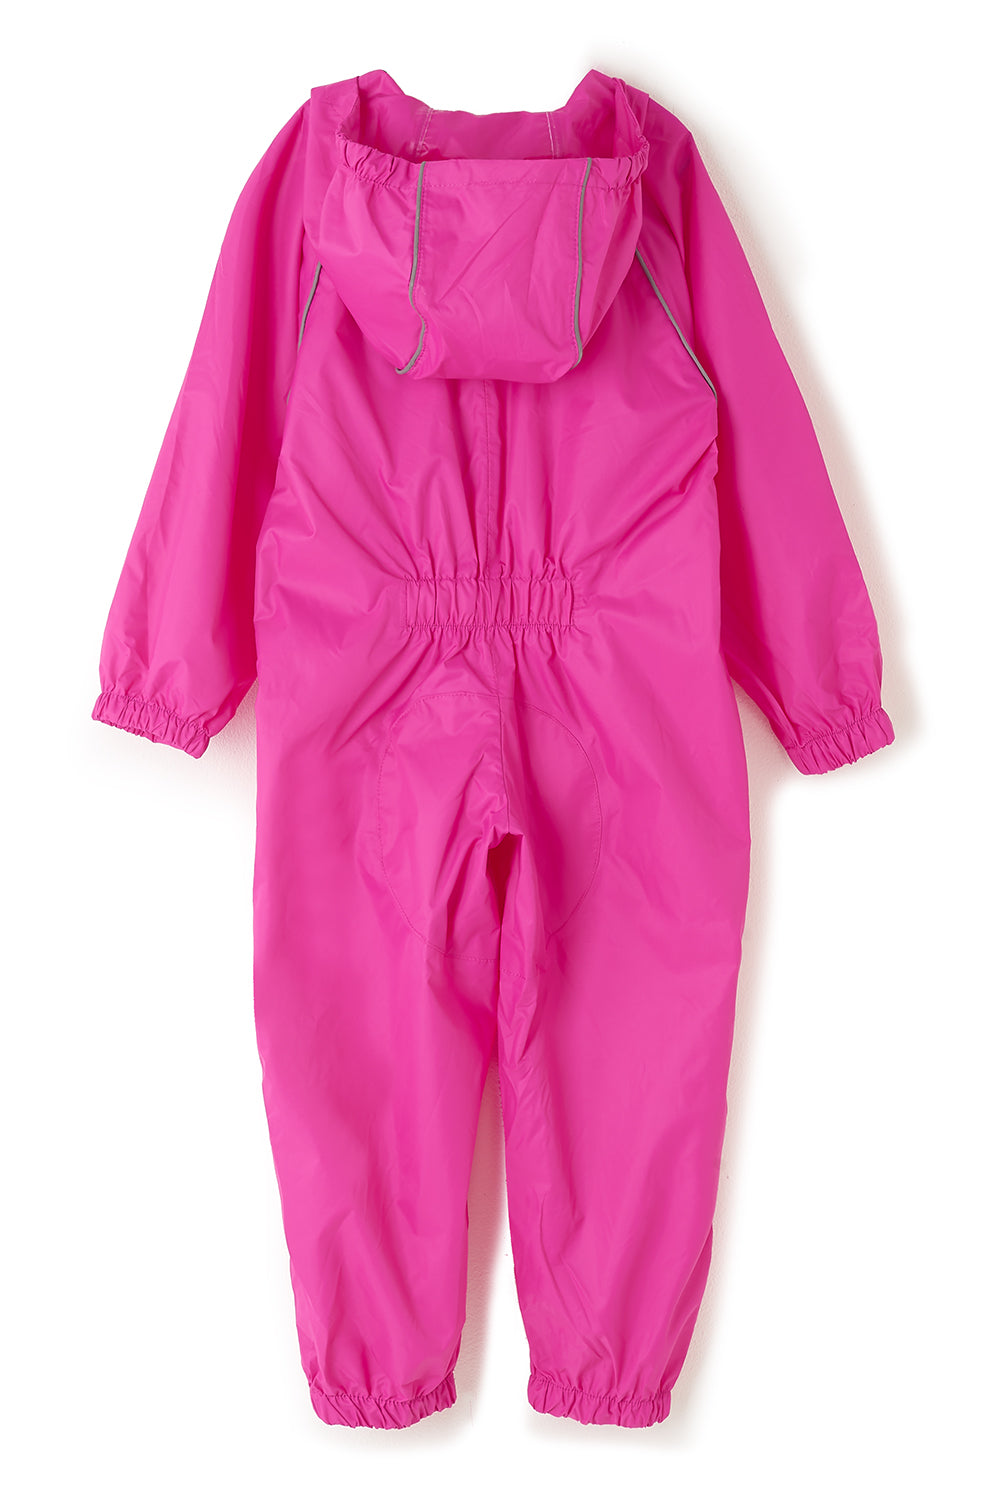 Puddlesuit Packable Waterproof Kids Rainsuit - Pink